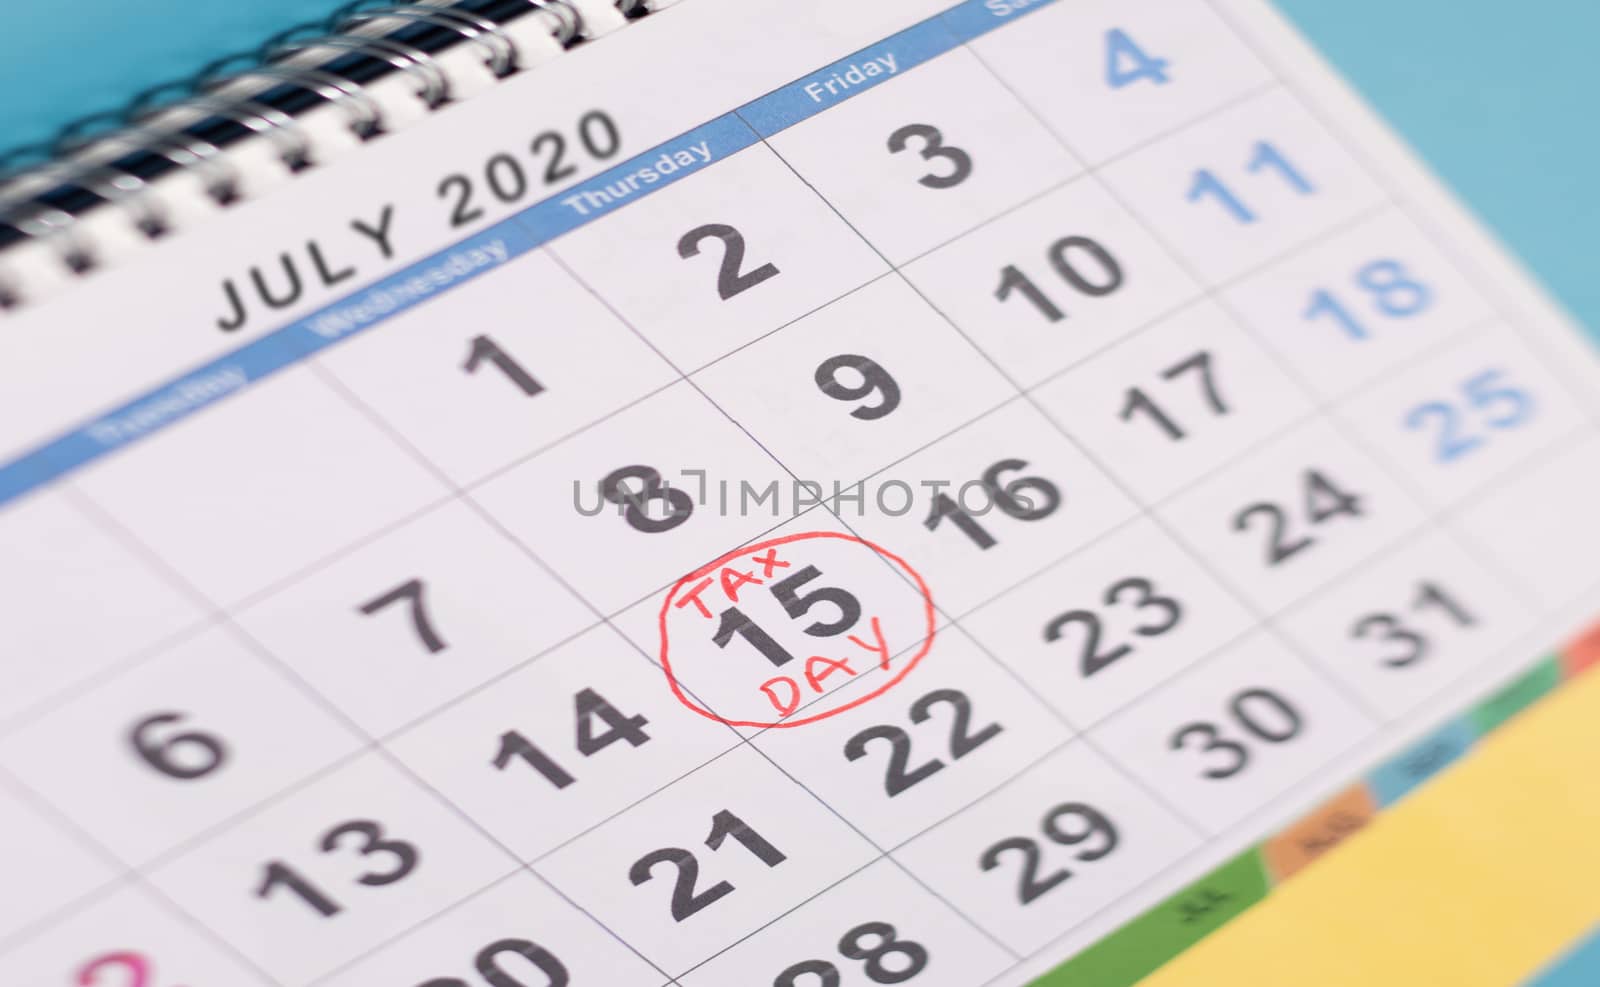 July 15th marked as tax day on calendar as reminder. by lakshmiprasad.maski@gmai.com